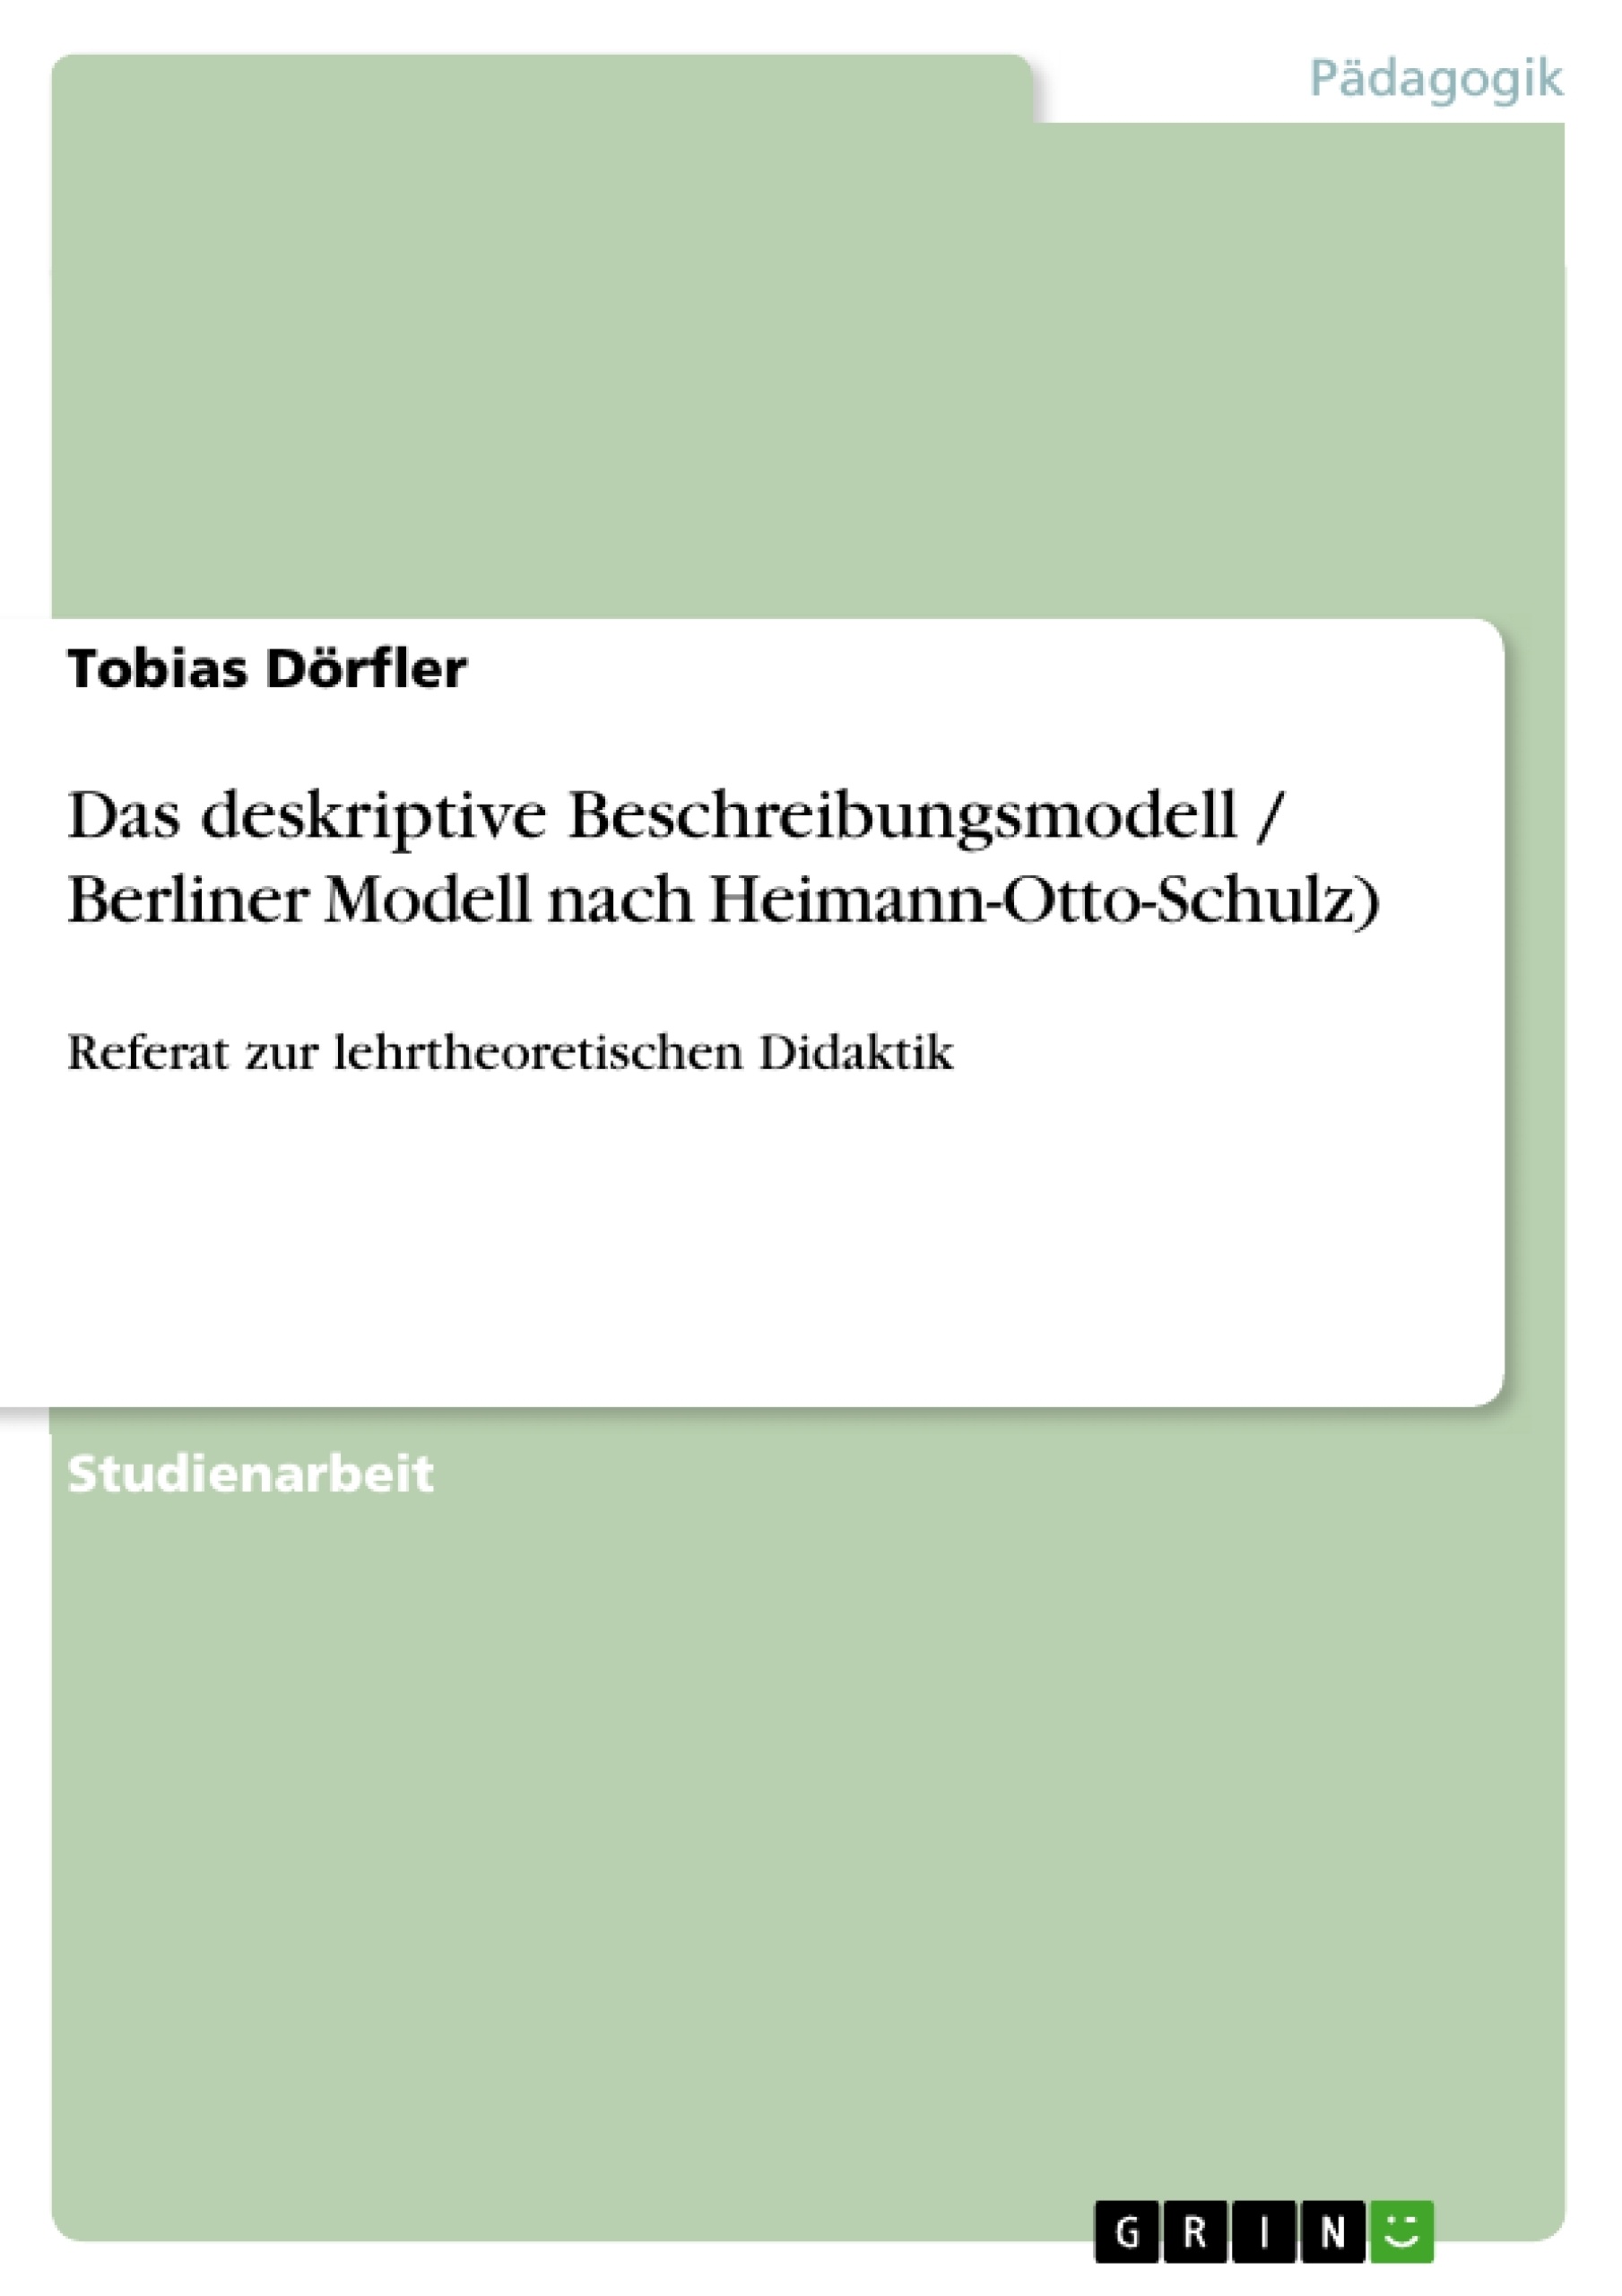 Título: Das deskriptive Beschreibungsmodell / Berliner Modell nach Heimann-Otto-Schulz)